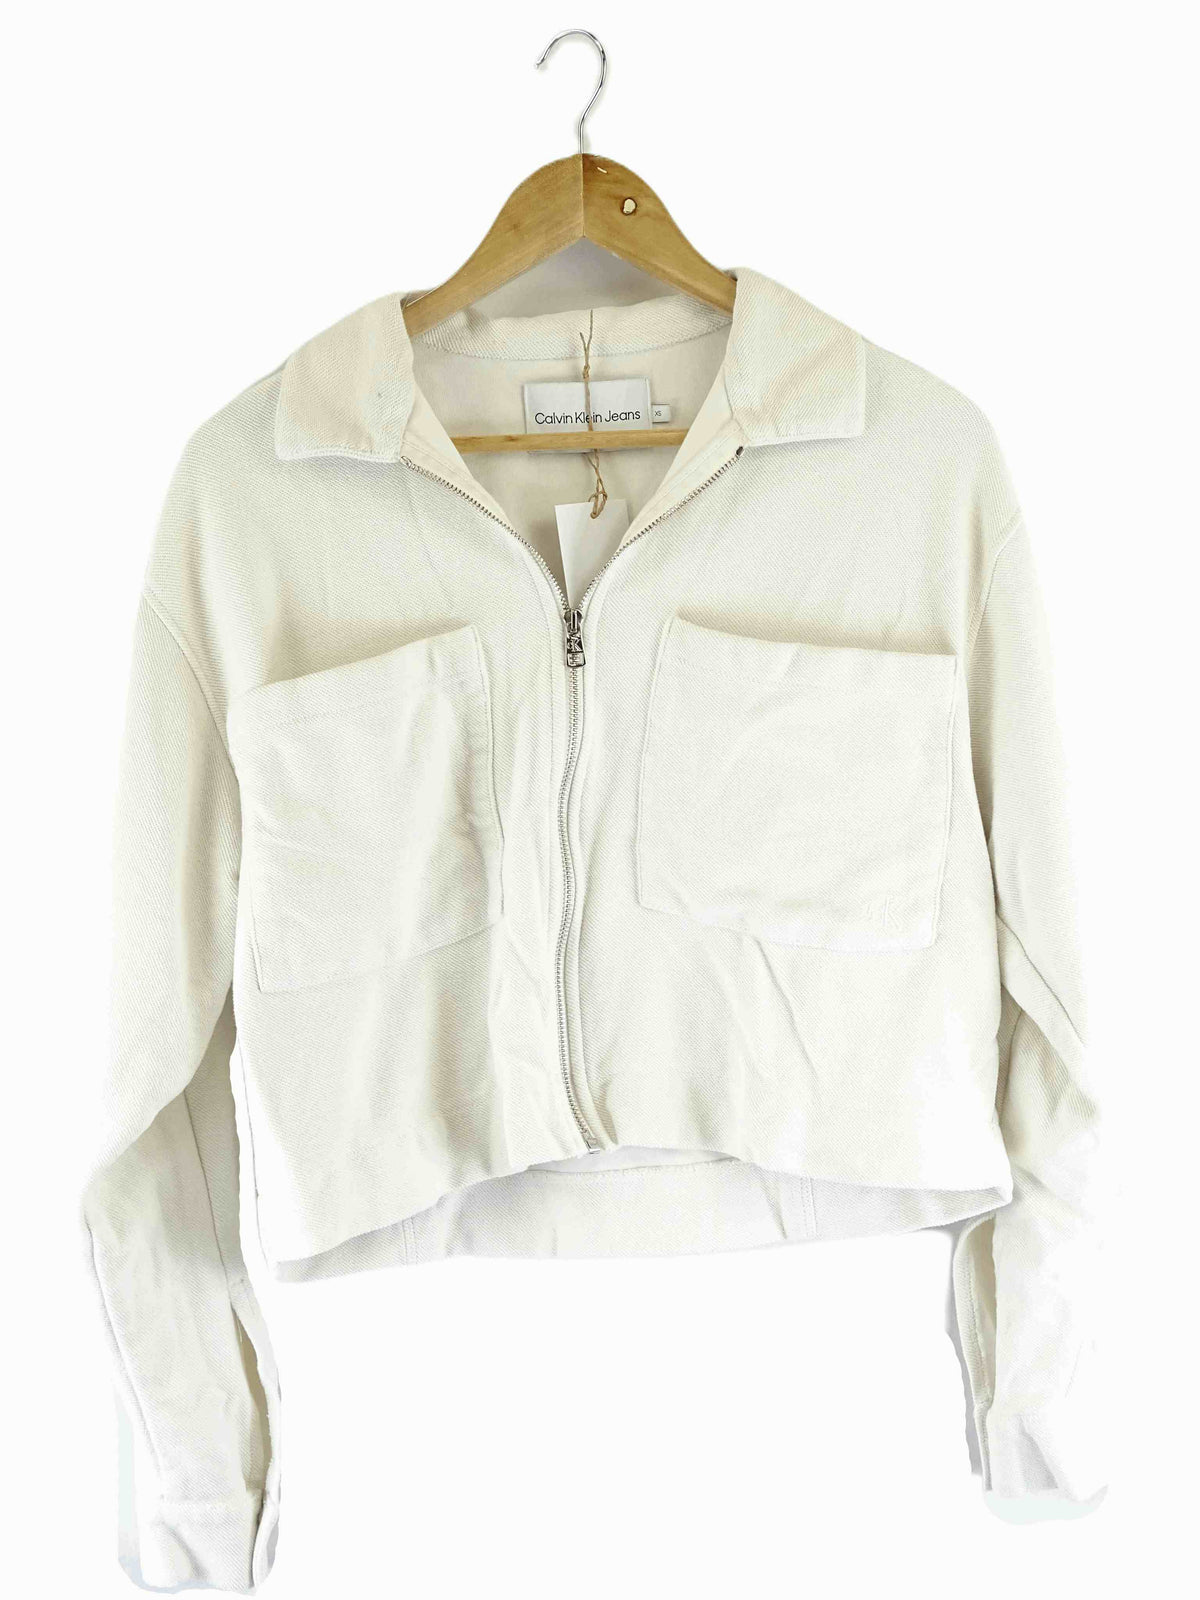 Calvin Klein Jeans White Cropped Jacket XS